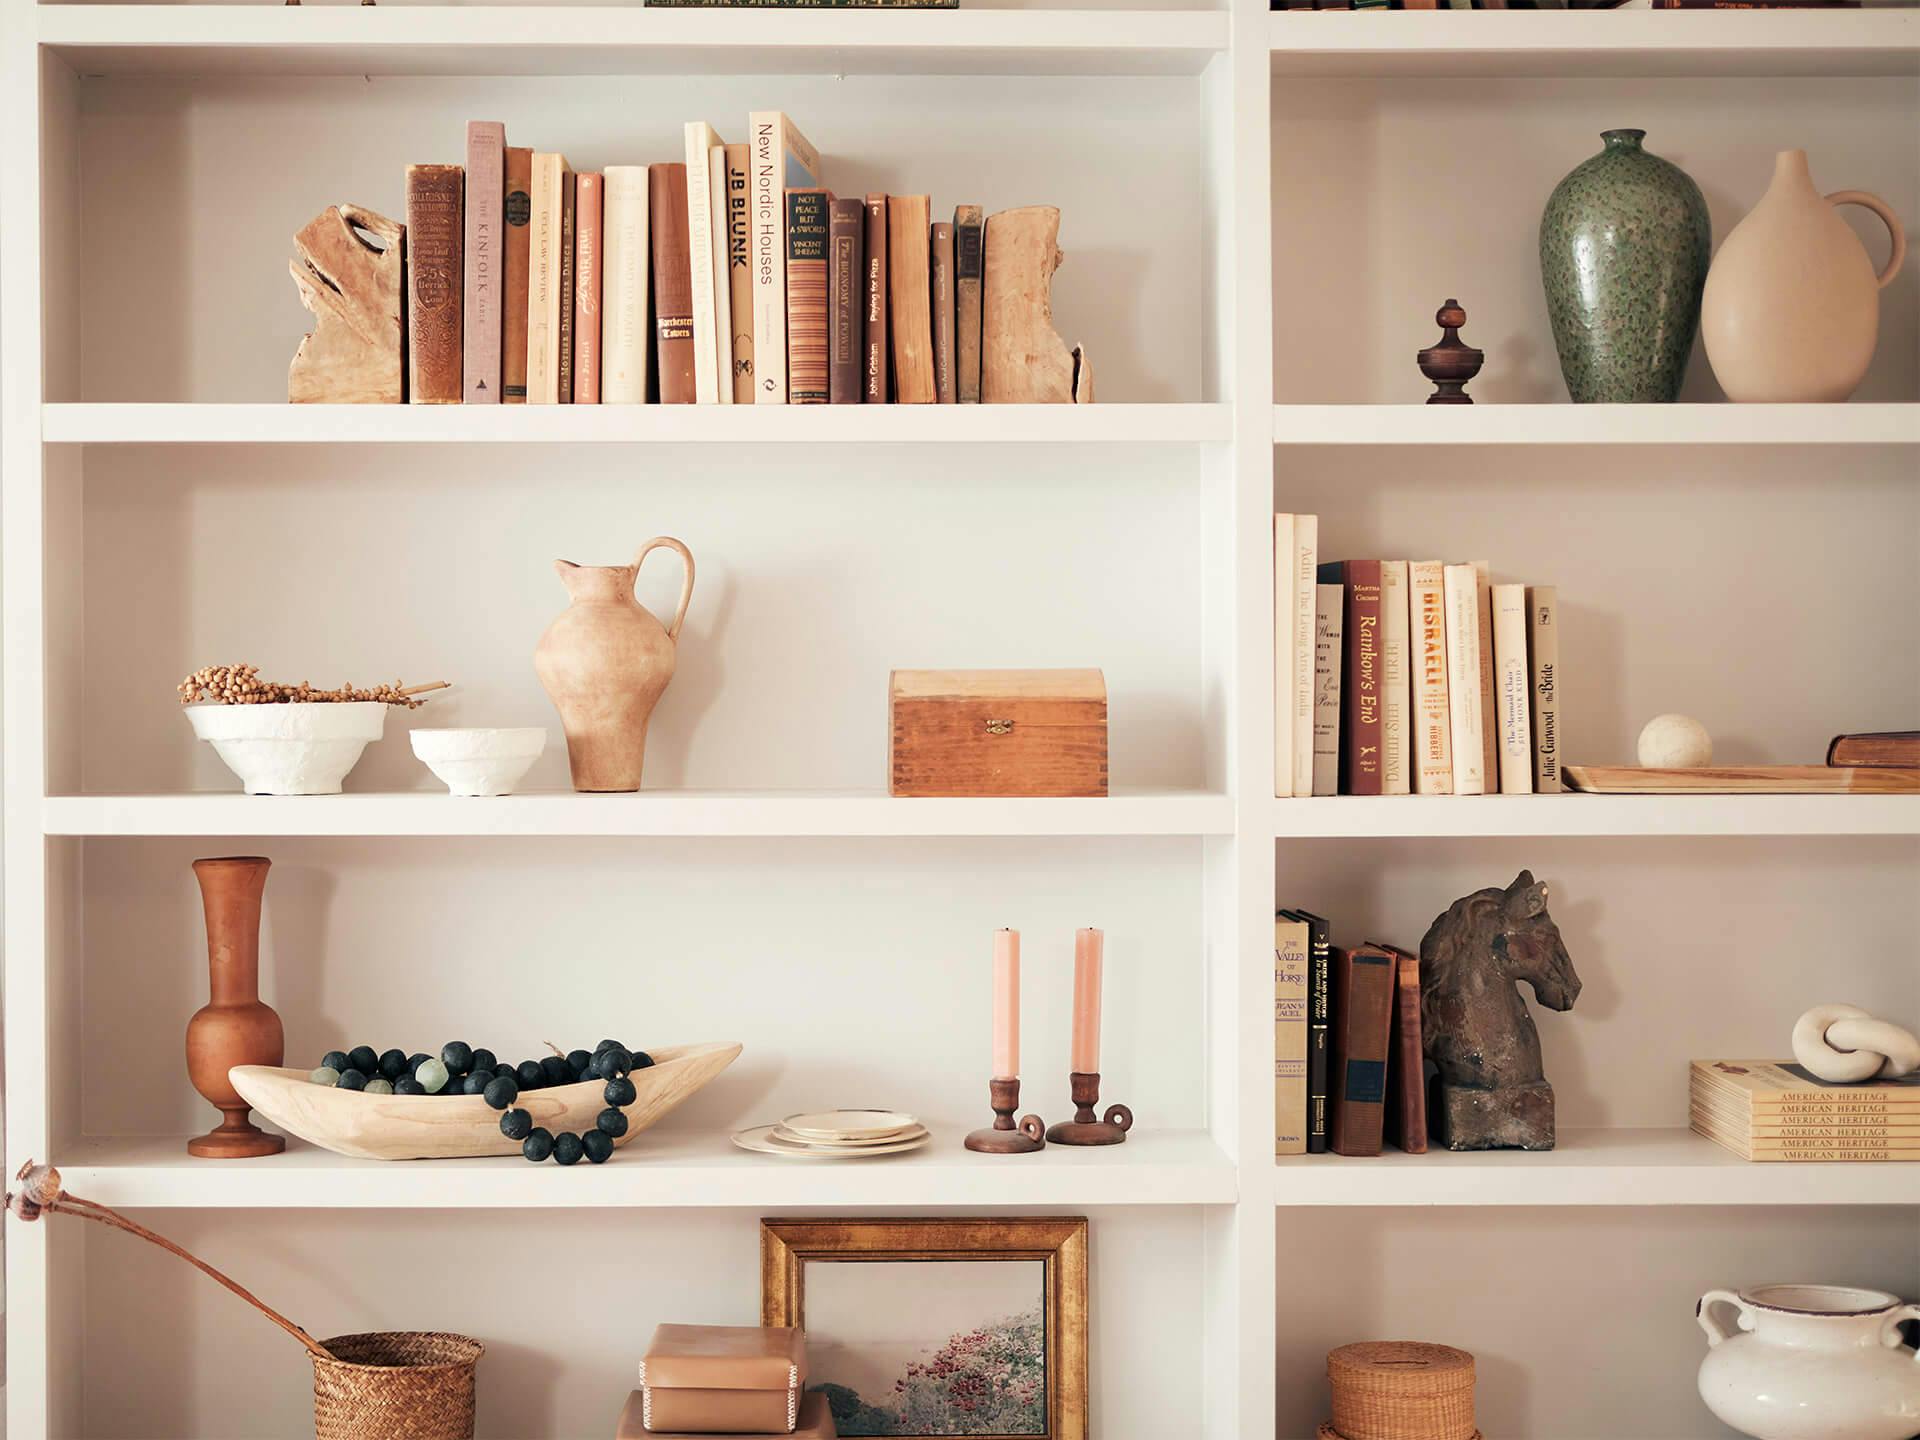 Bookshelf arranged with various books, vases, bowls, etc